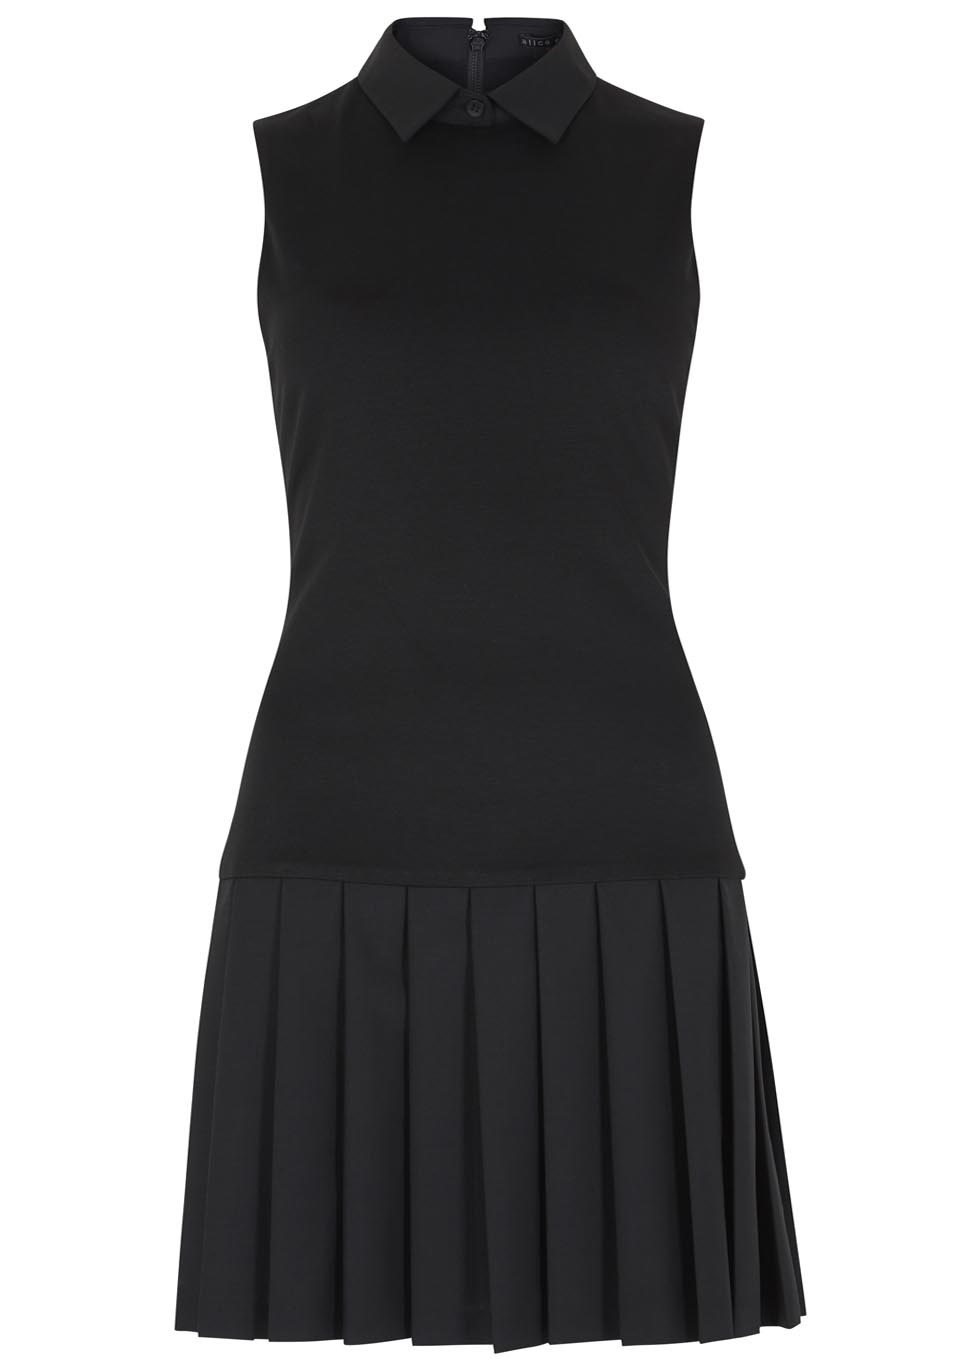 Black pleated stretch jersey dress